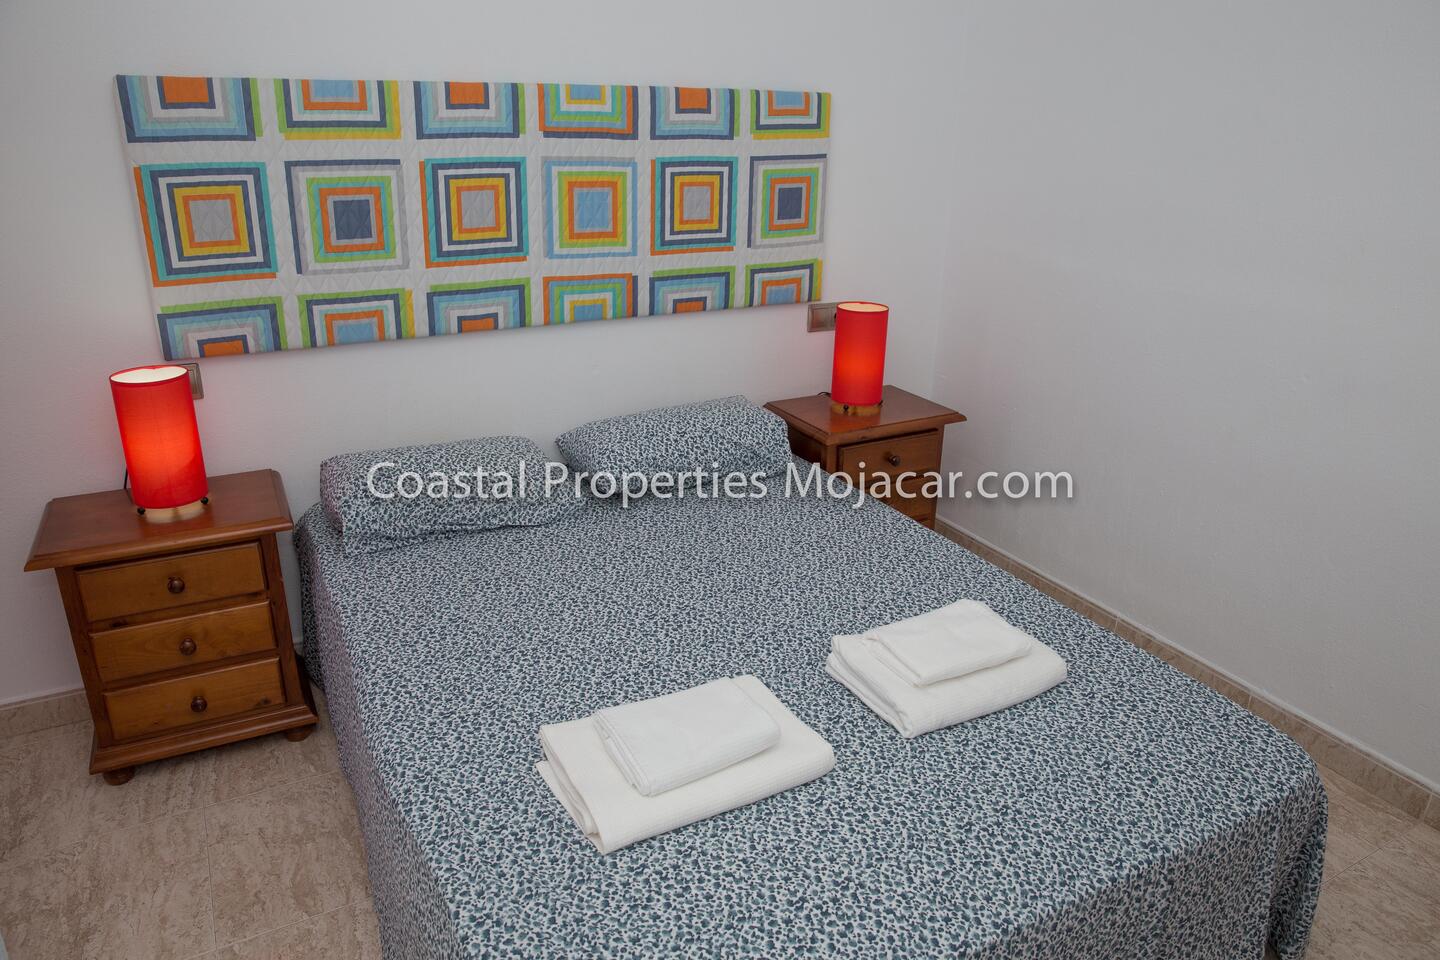 CPM 004 - PERLA DEL MAR: Apartment for Sale in Mojácar, Almería